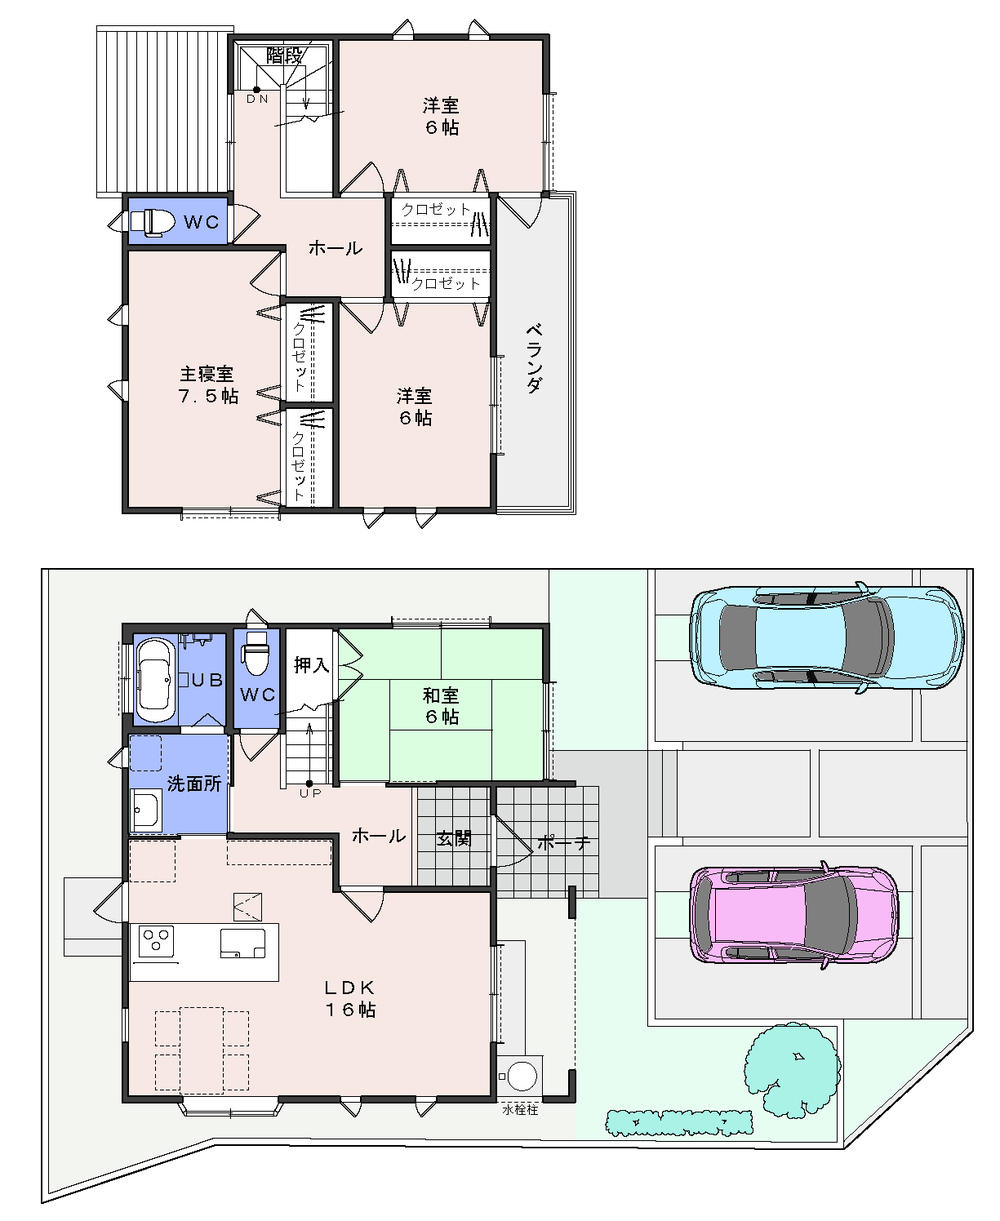 Floor plan. (3 Building), Price 28 million yen, 4LDK, Land area 160.56 sq m , Building area 104.33 sq m